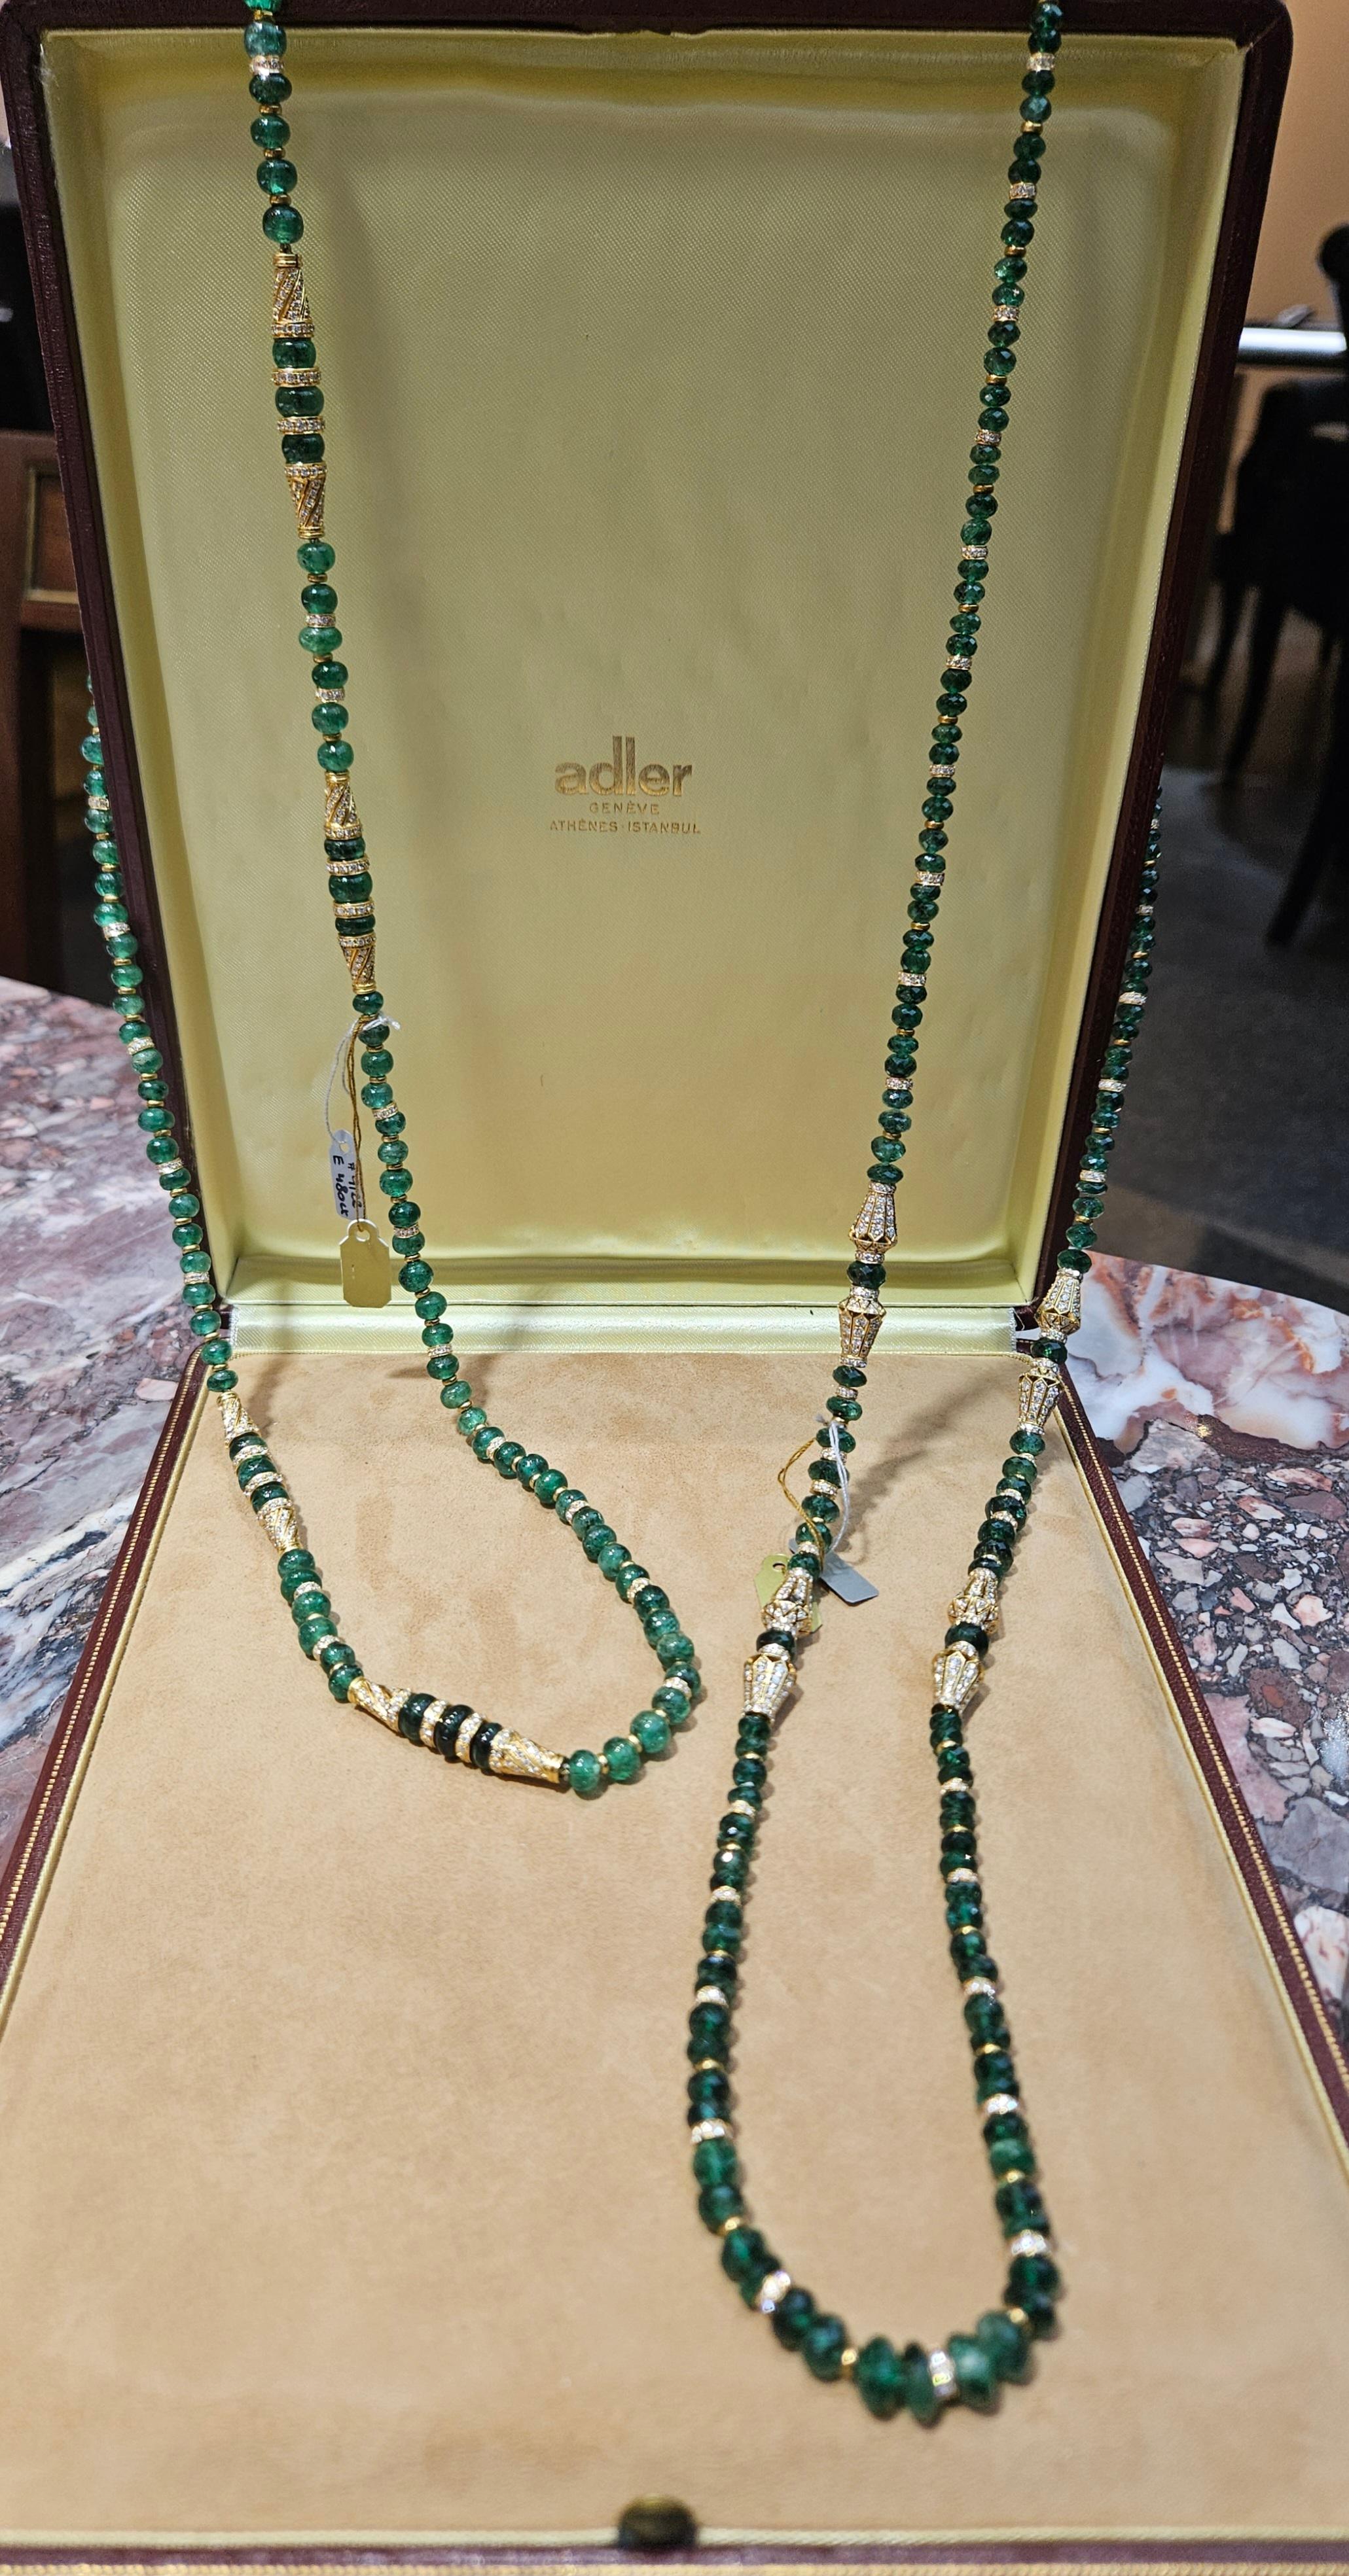 Adler Genèva 18kt Gold Necklaces 480ct Faceted Bead Emeralds CGL Certified For Sale 14